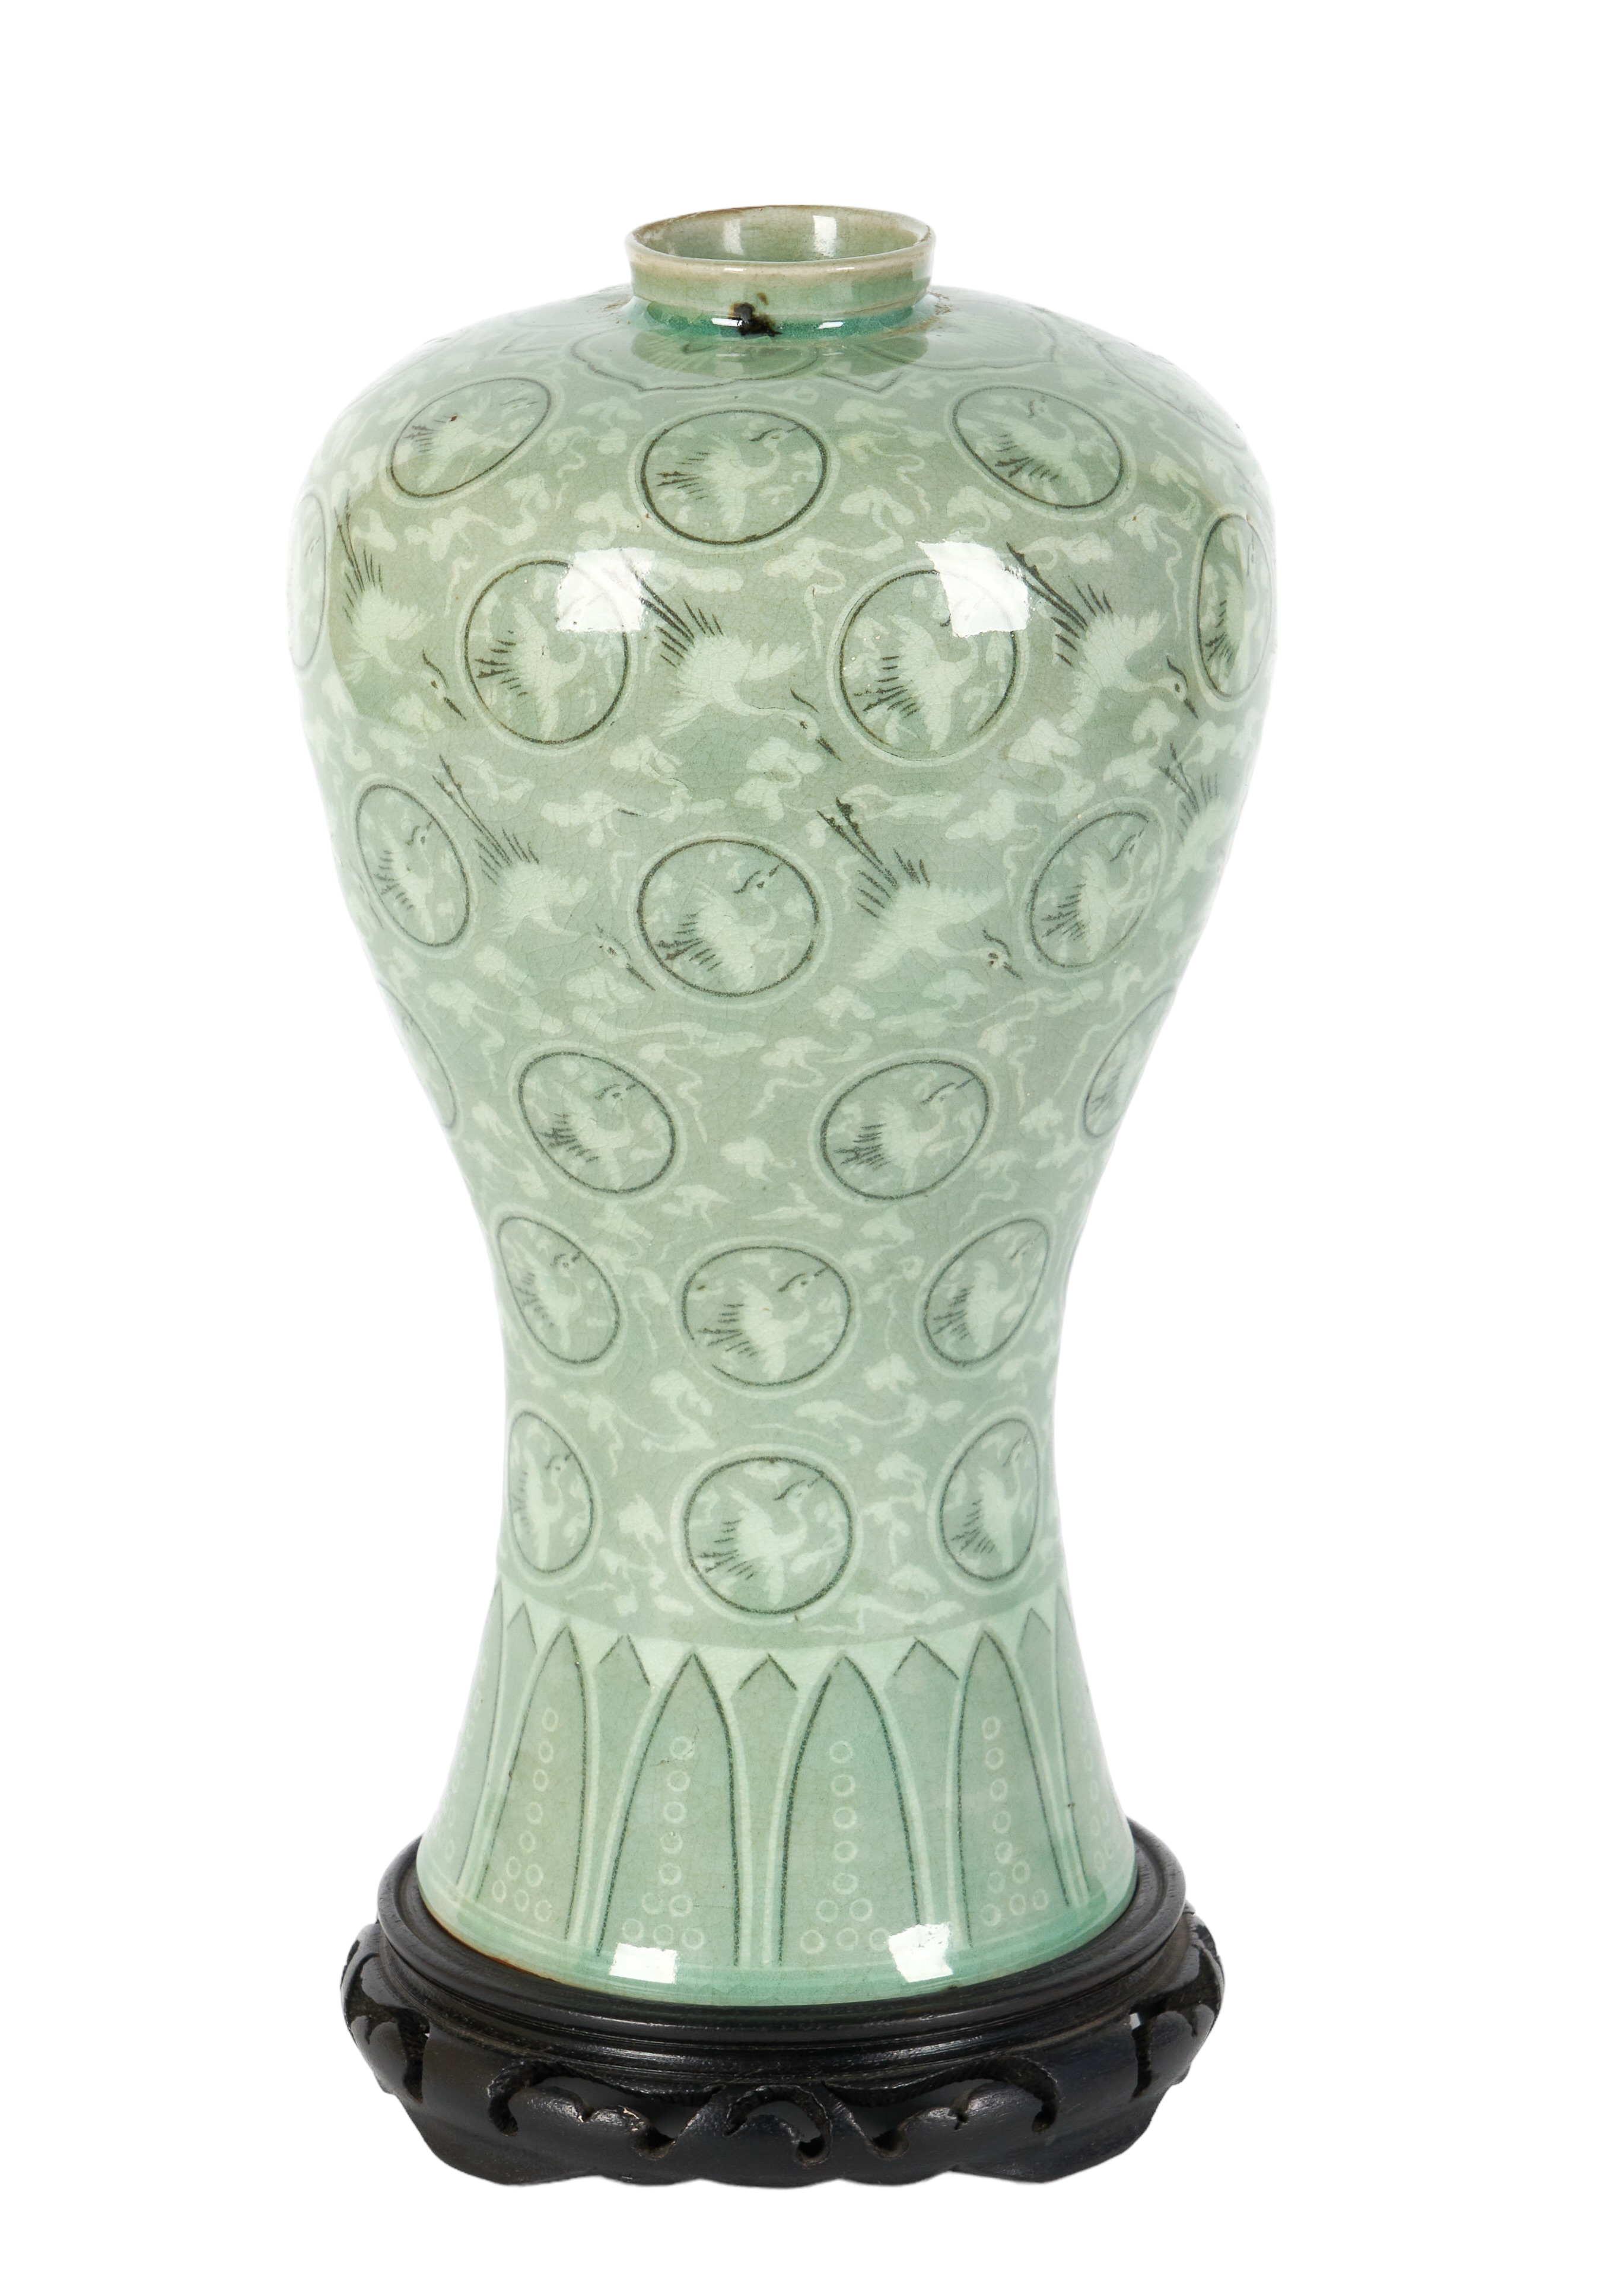 Korean celadon porcelain plum vase  2e22c7